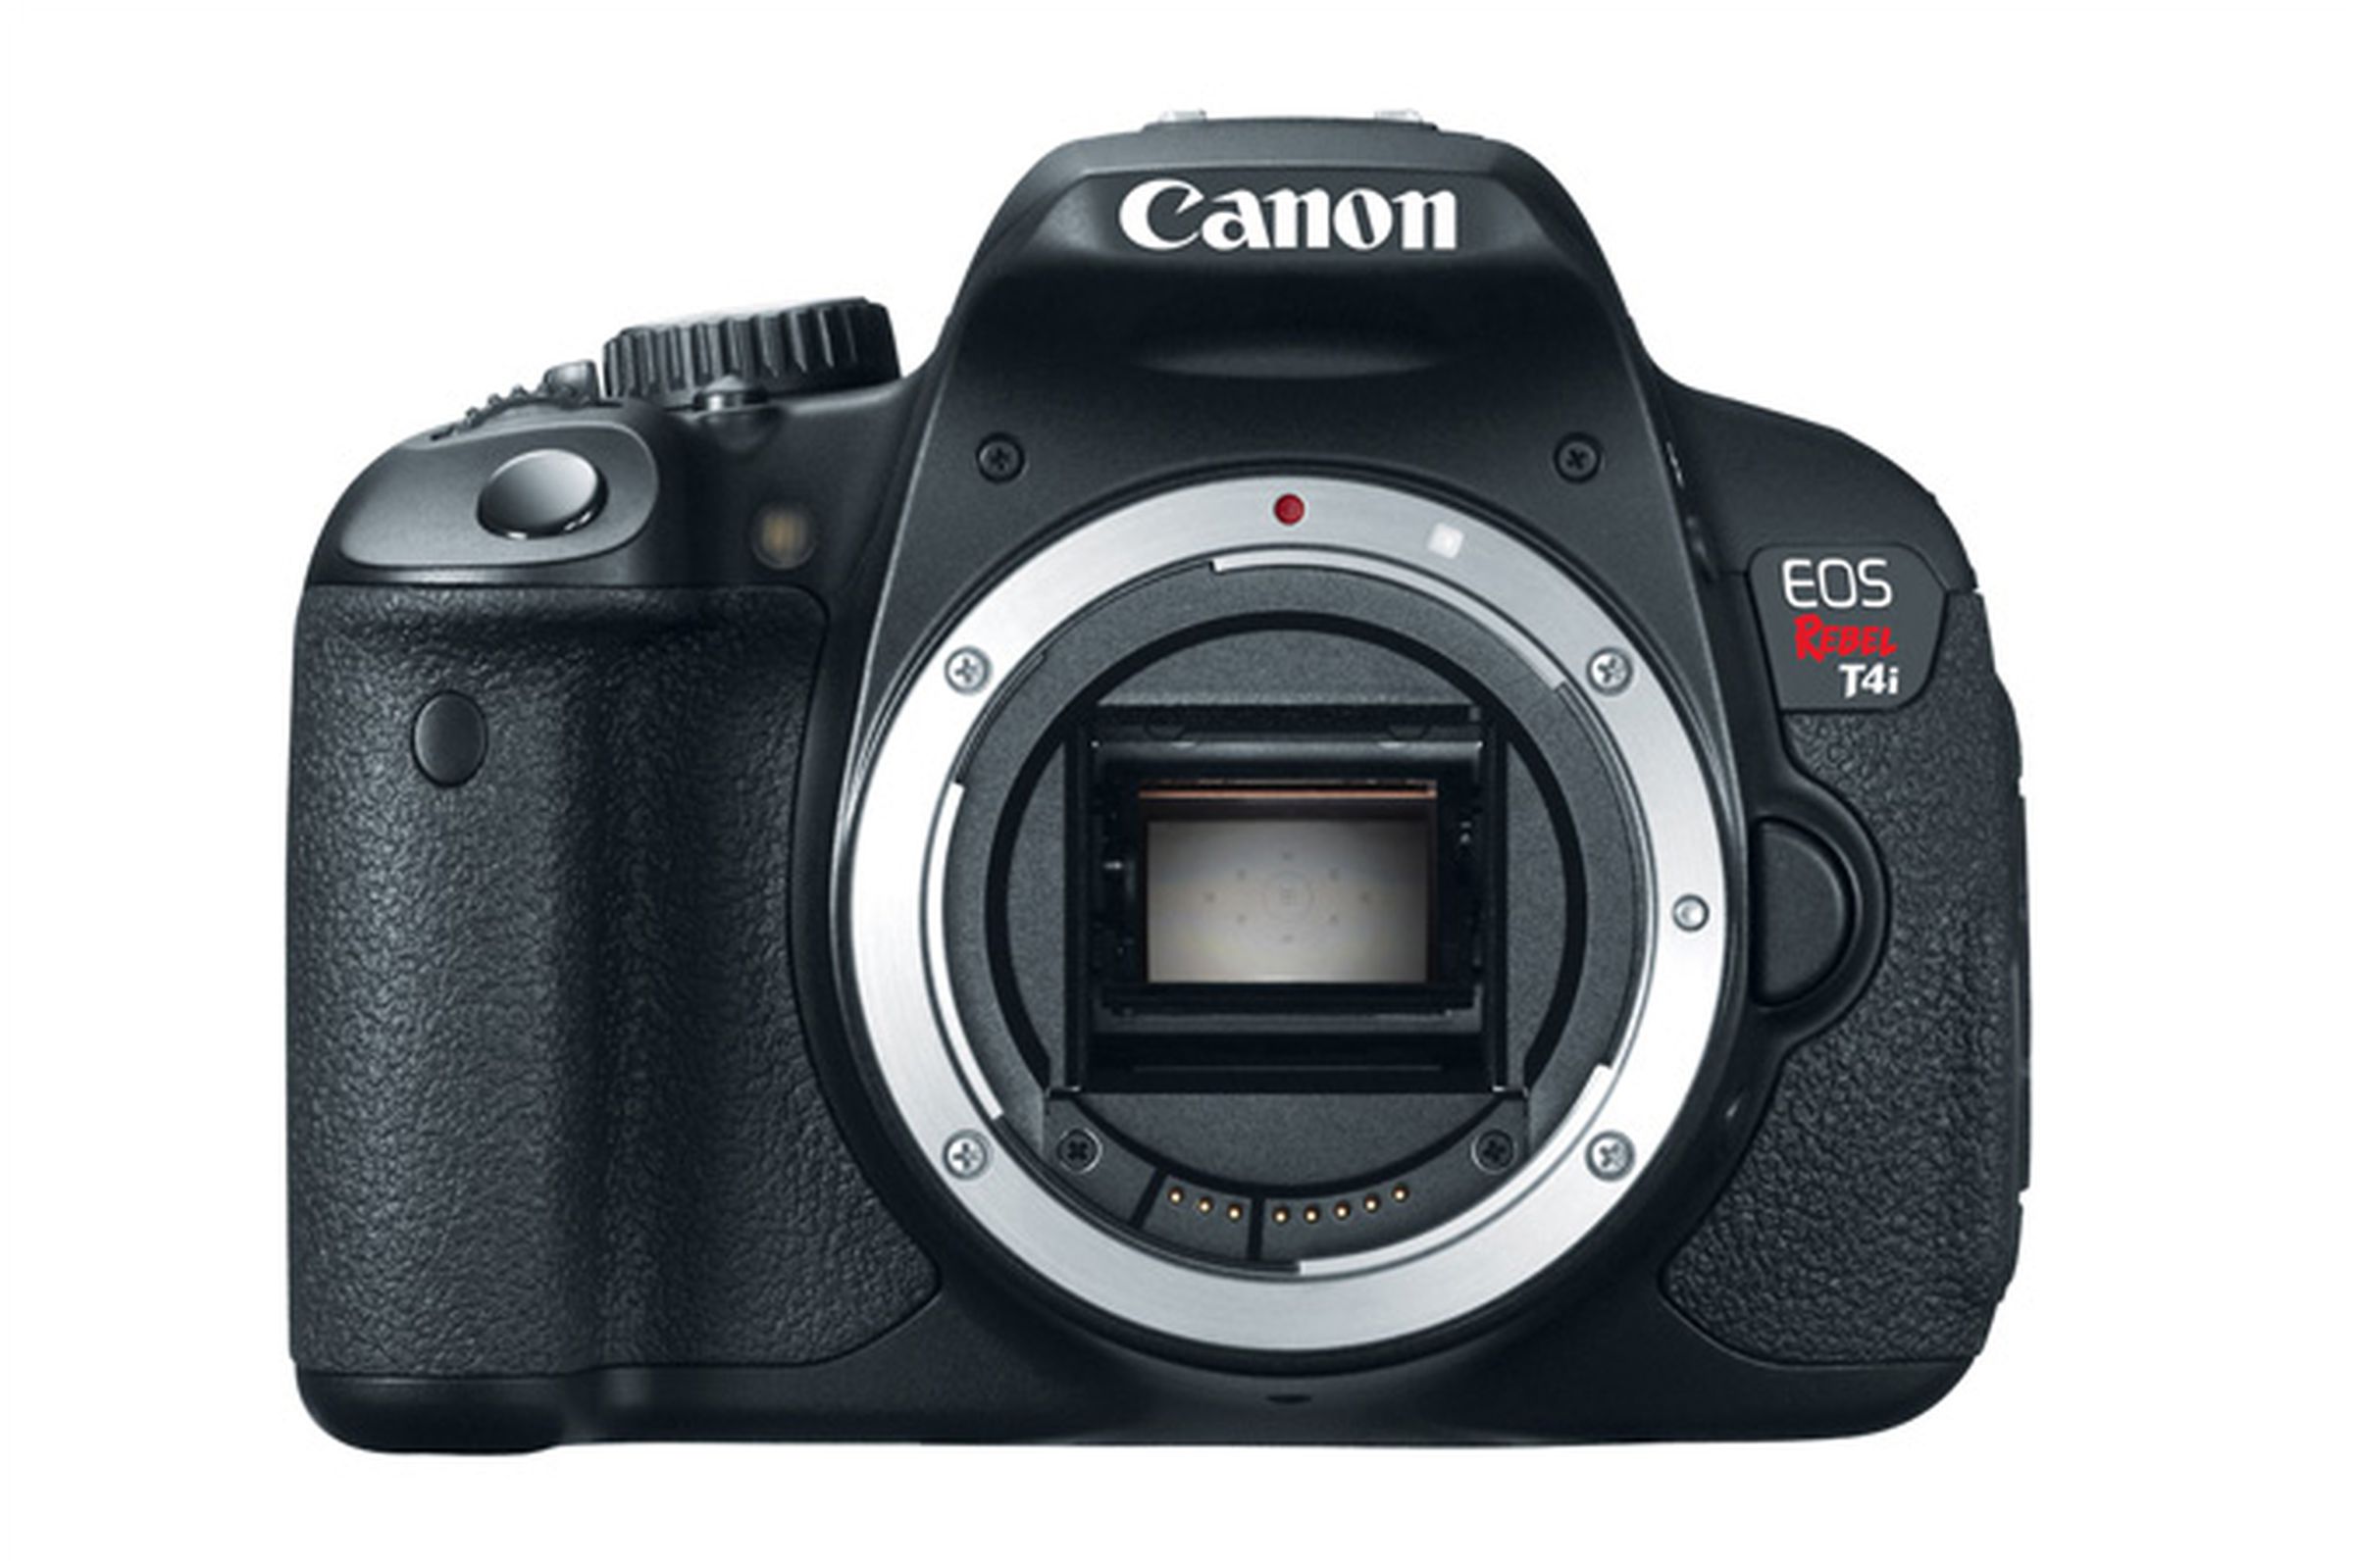 Canon EOS Rebel T4i press images